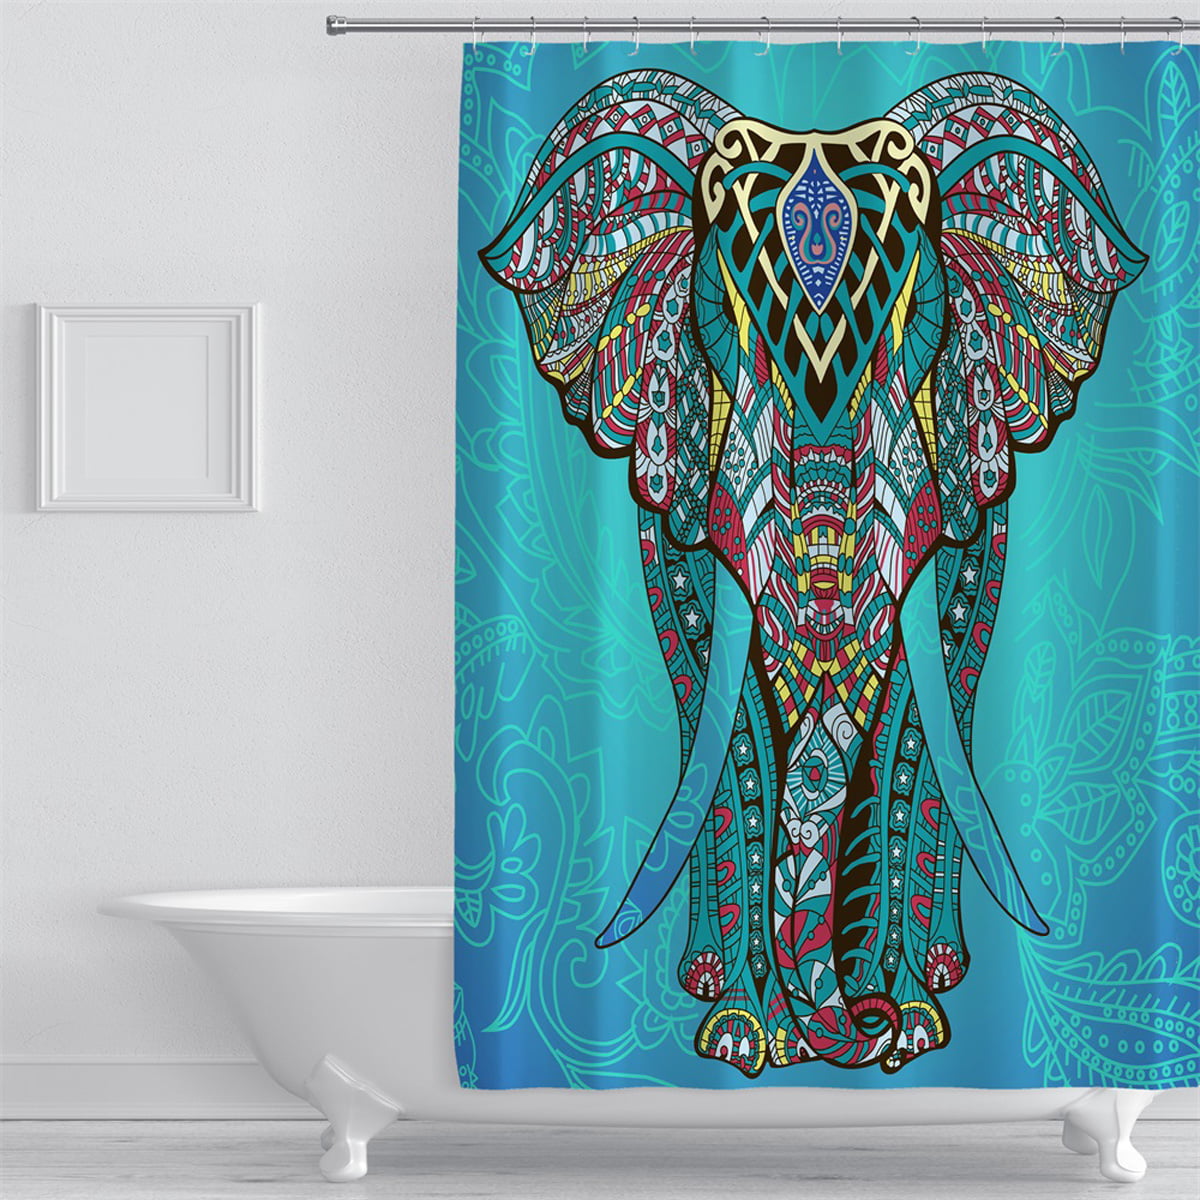 Elephant Pattern Waterproof Shower Curtain Fabric Bath Set with 12 Hooks 72"x72" 